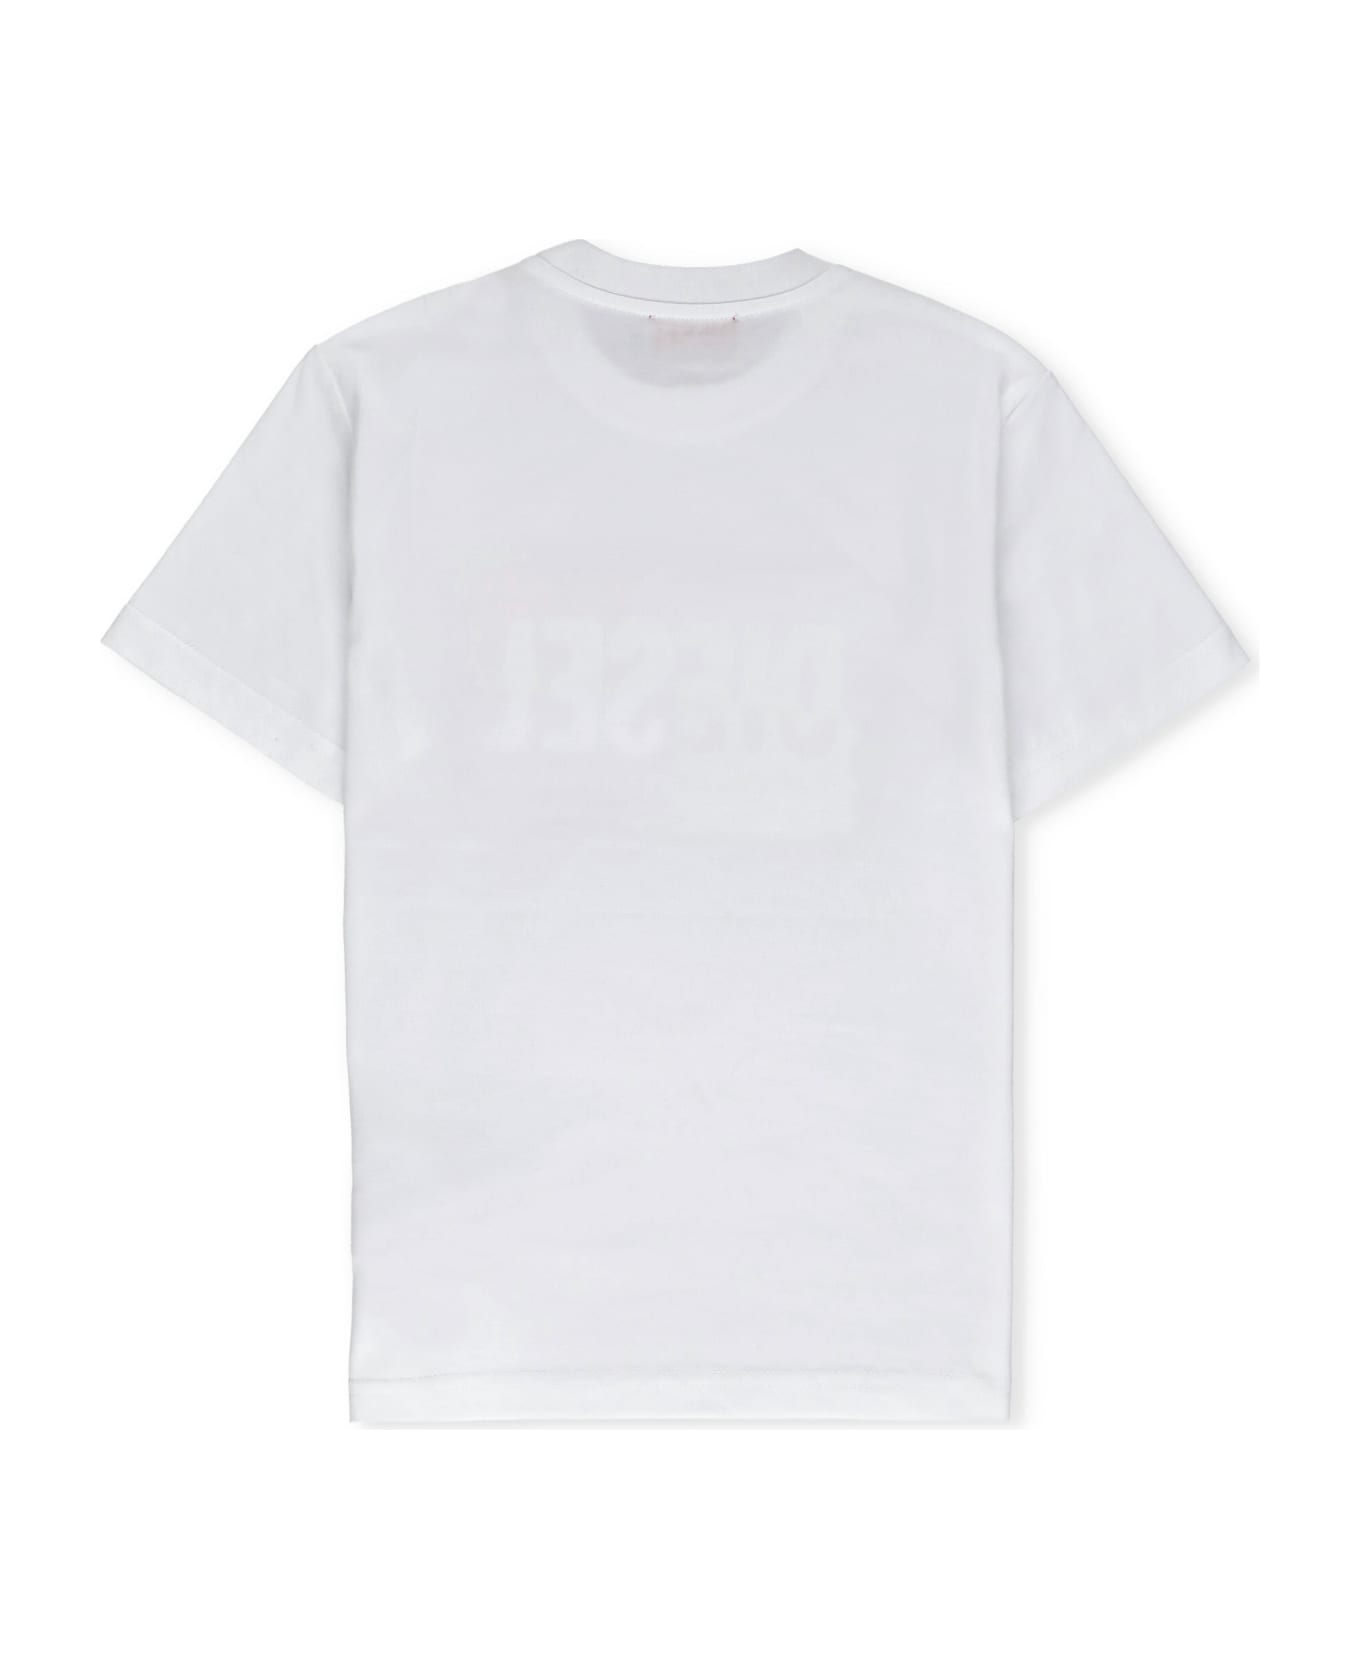 Diesel Tkand T-shirt - White